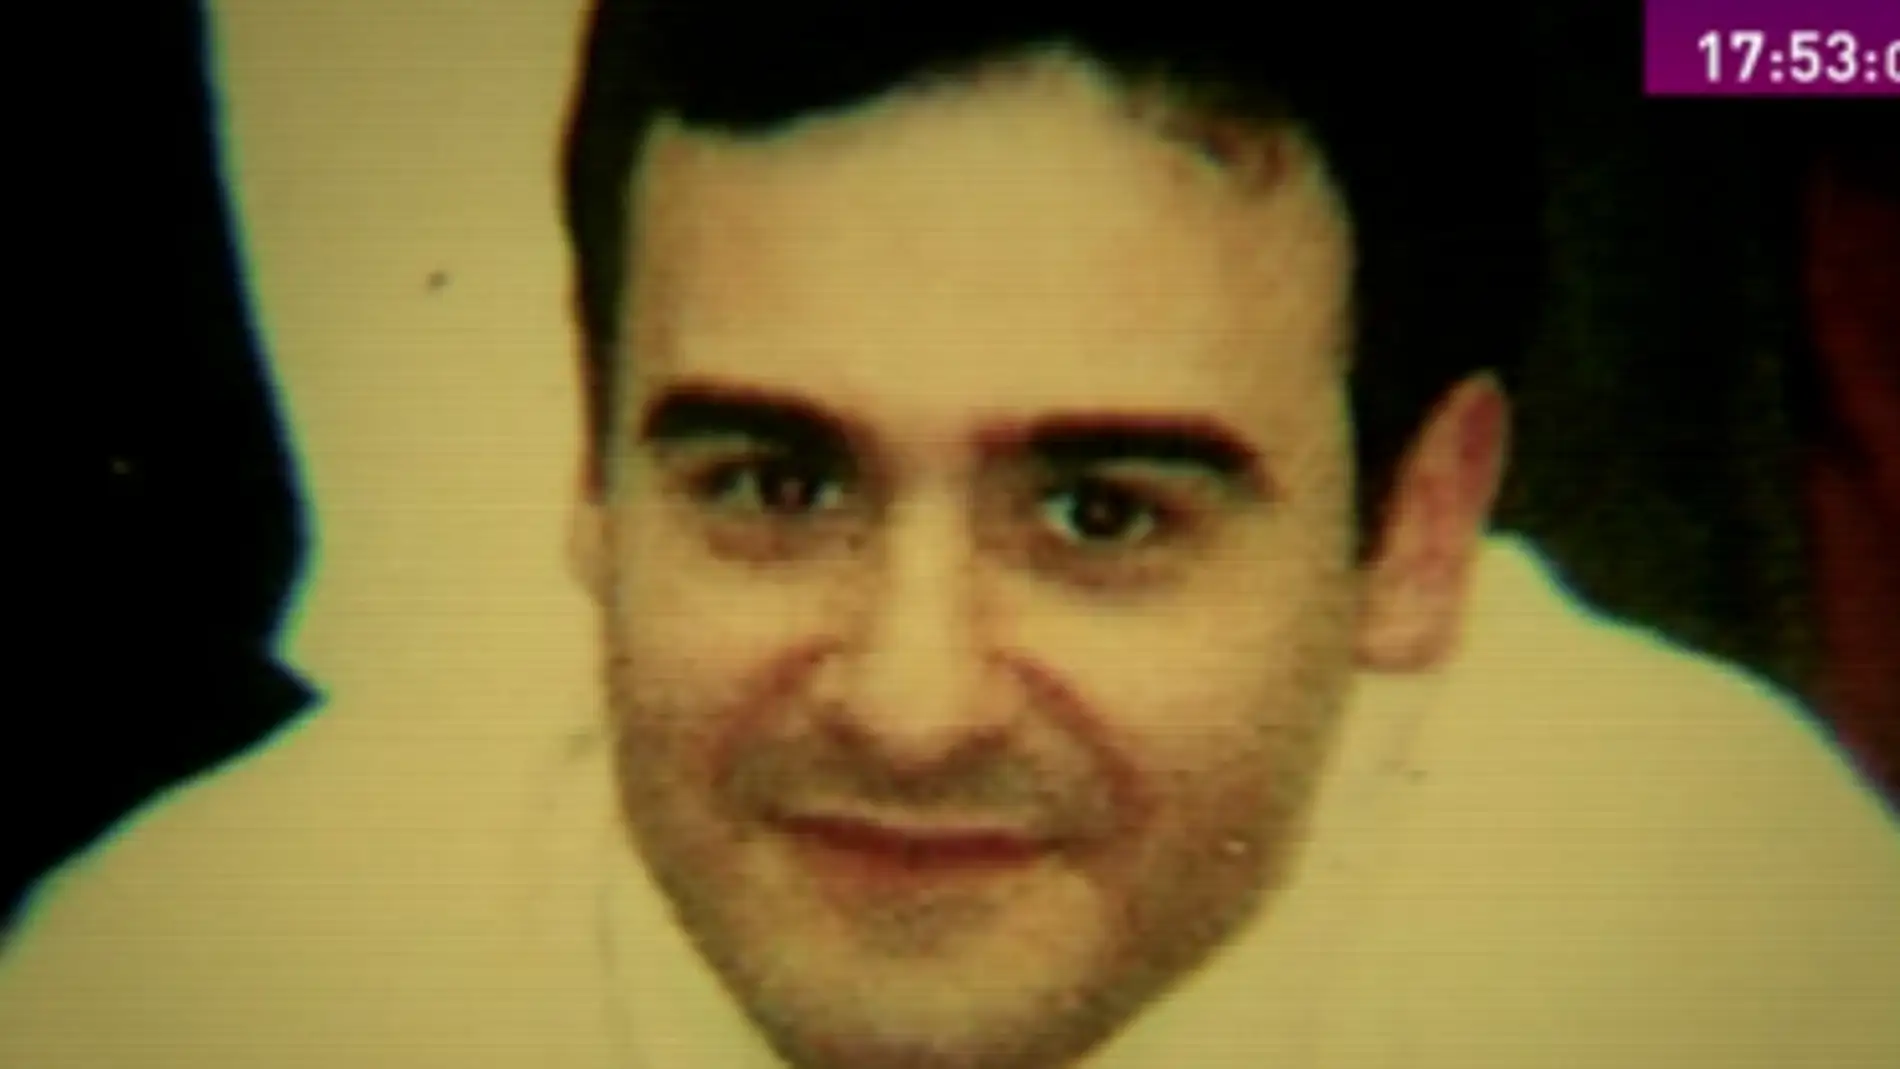 Joaquín Ferrándiz (JFV),e l asesino en serie de Castellón, sale de prisión 25 años después 